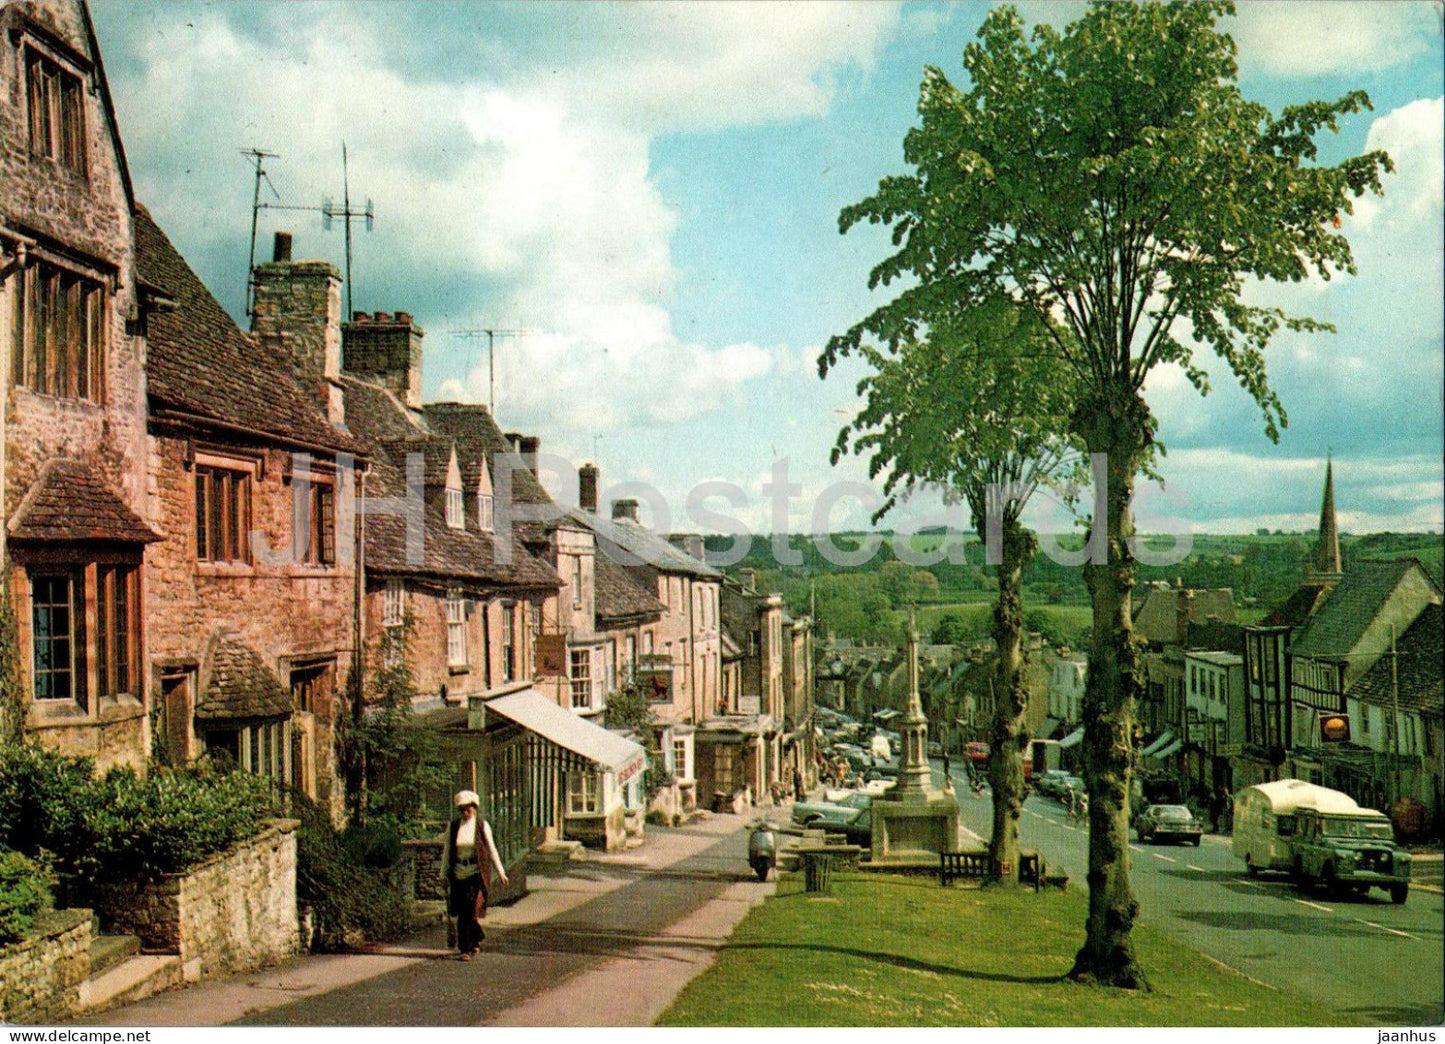 Burford - High street and War Memorial - 21518 - England - United Kingdom - unused - JH Postcards